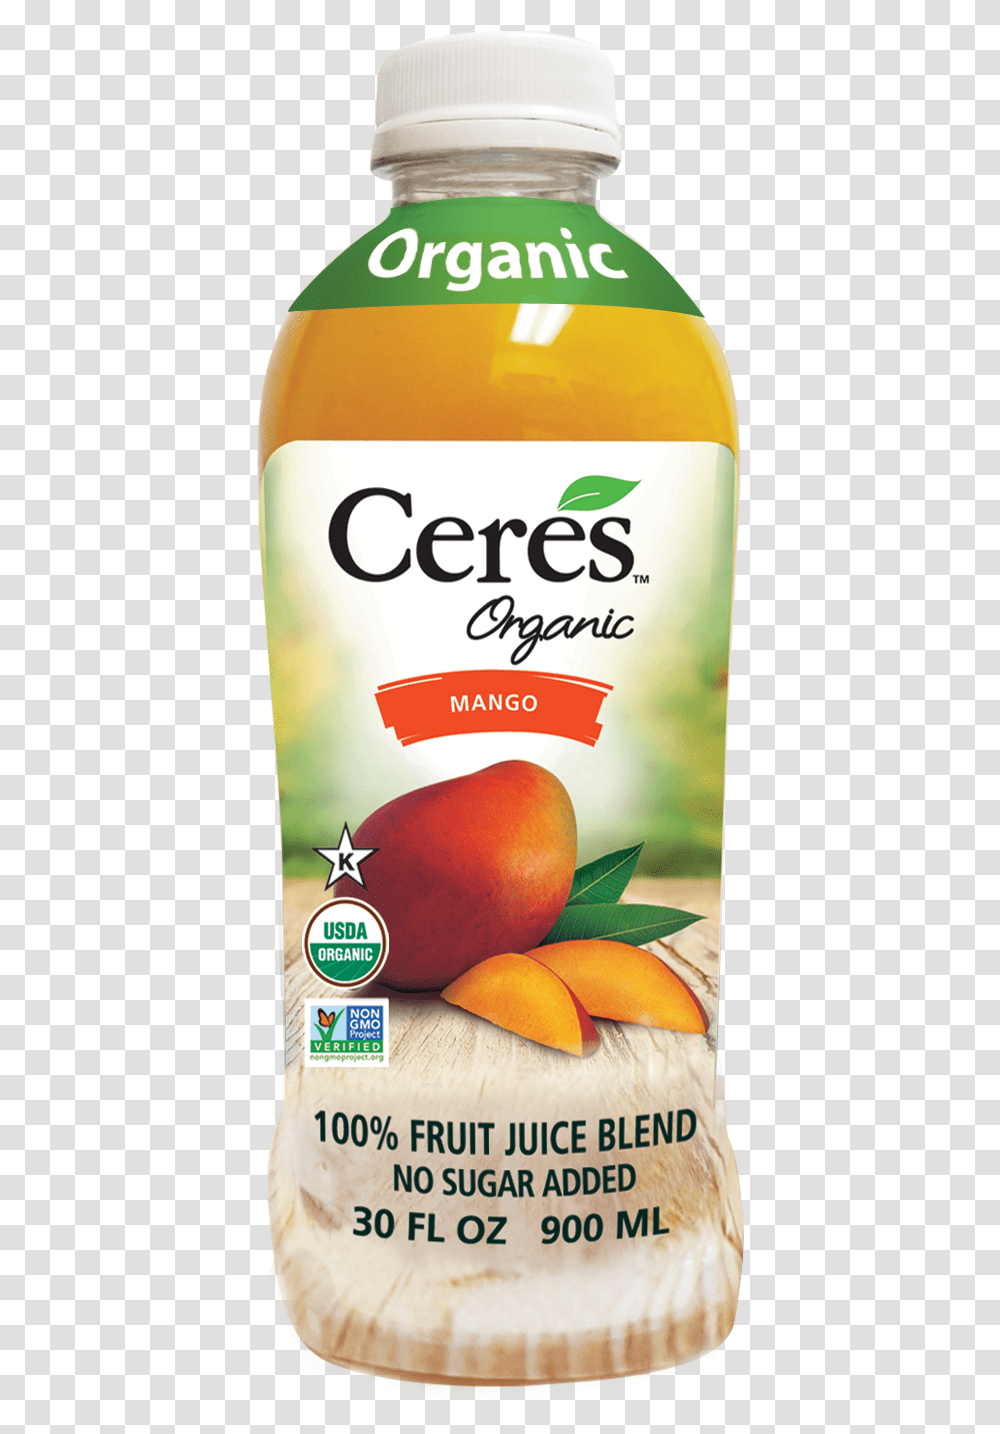 Mango Fruit Juice Blend Ceres Organic Pear Juice, Plant, Food, Beer, Alcohol Transparent Png